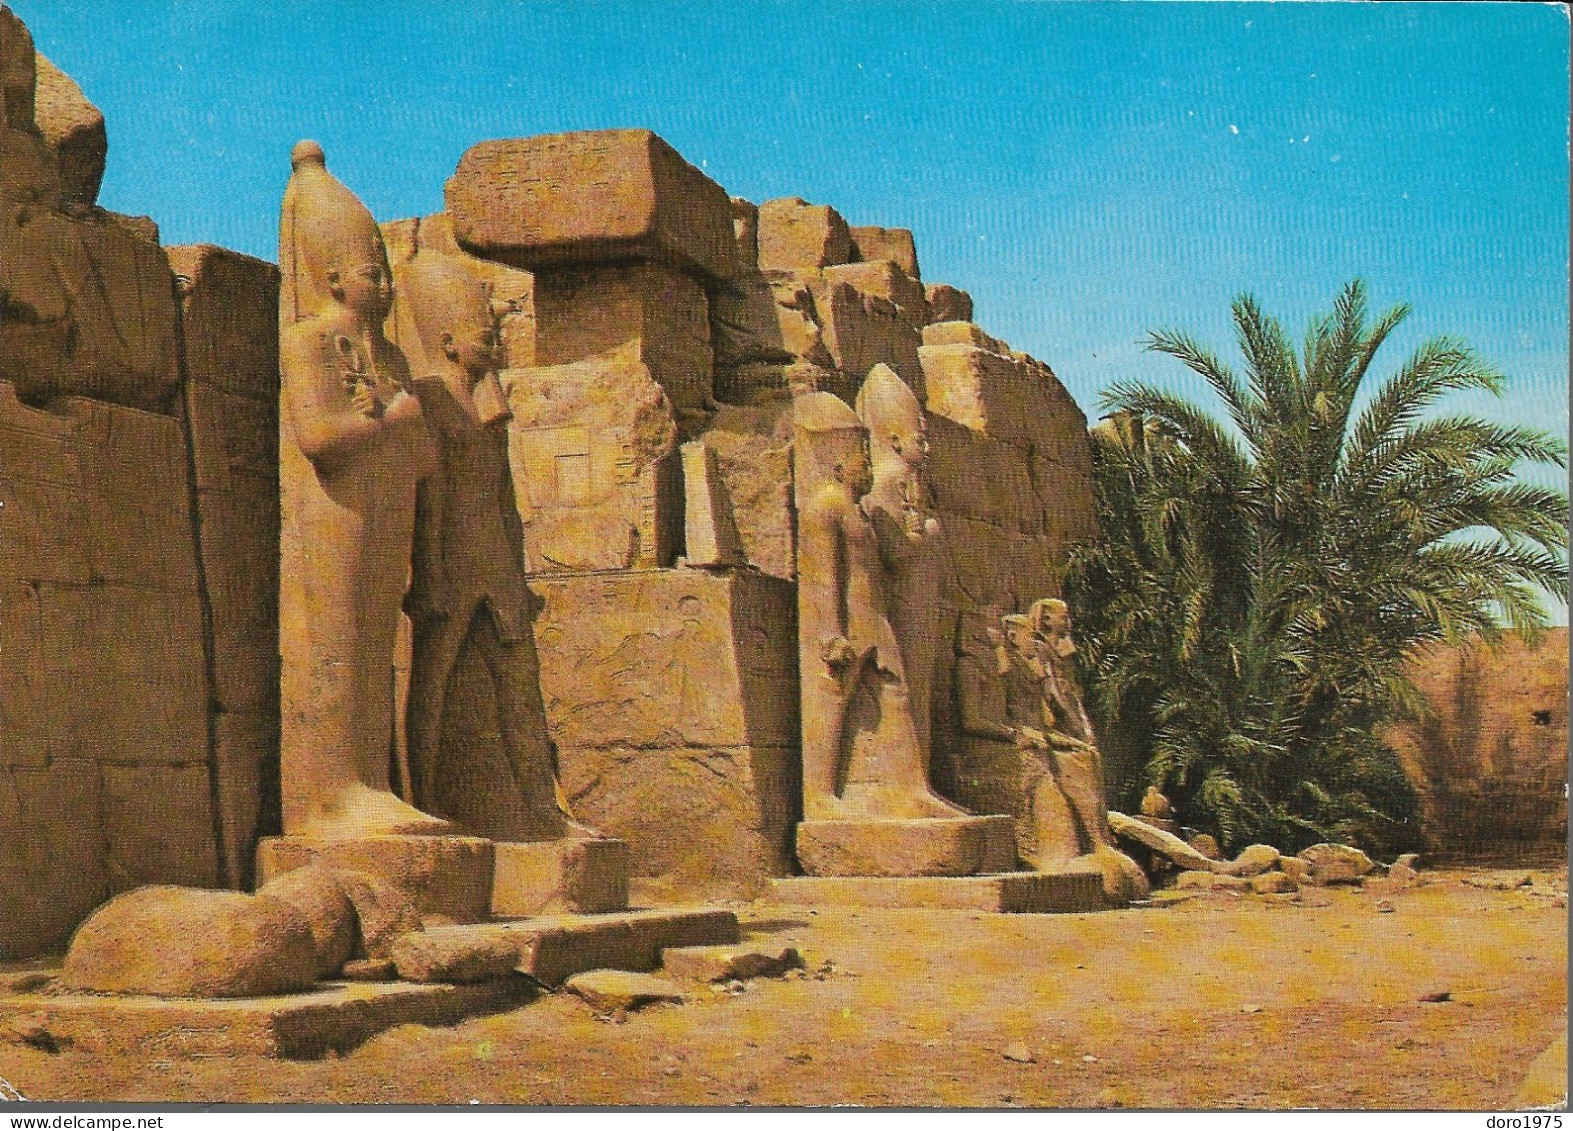 EGYPT - Karnak Temple - VIIth Pylon - Used Postcard - Louxor